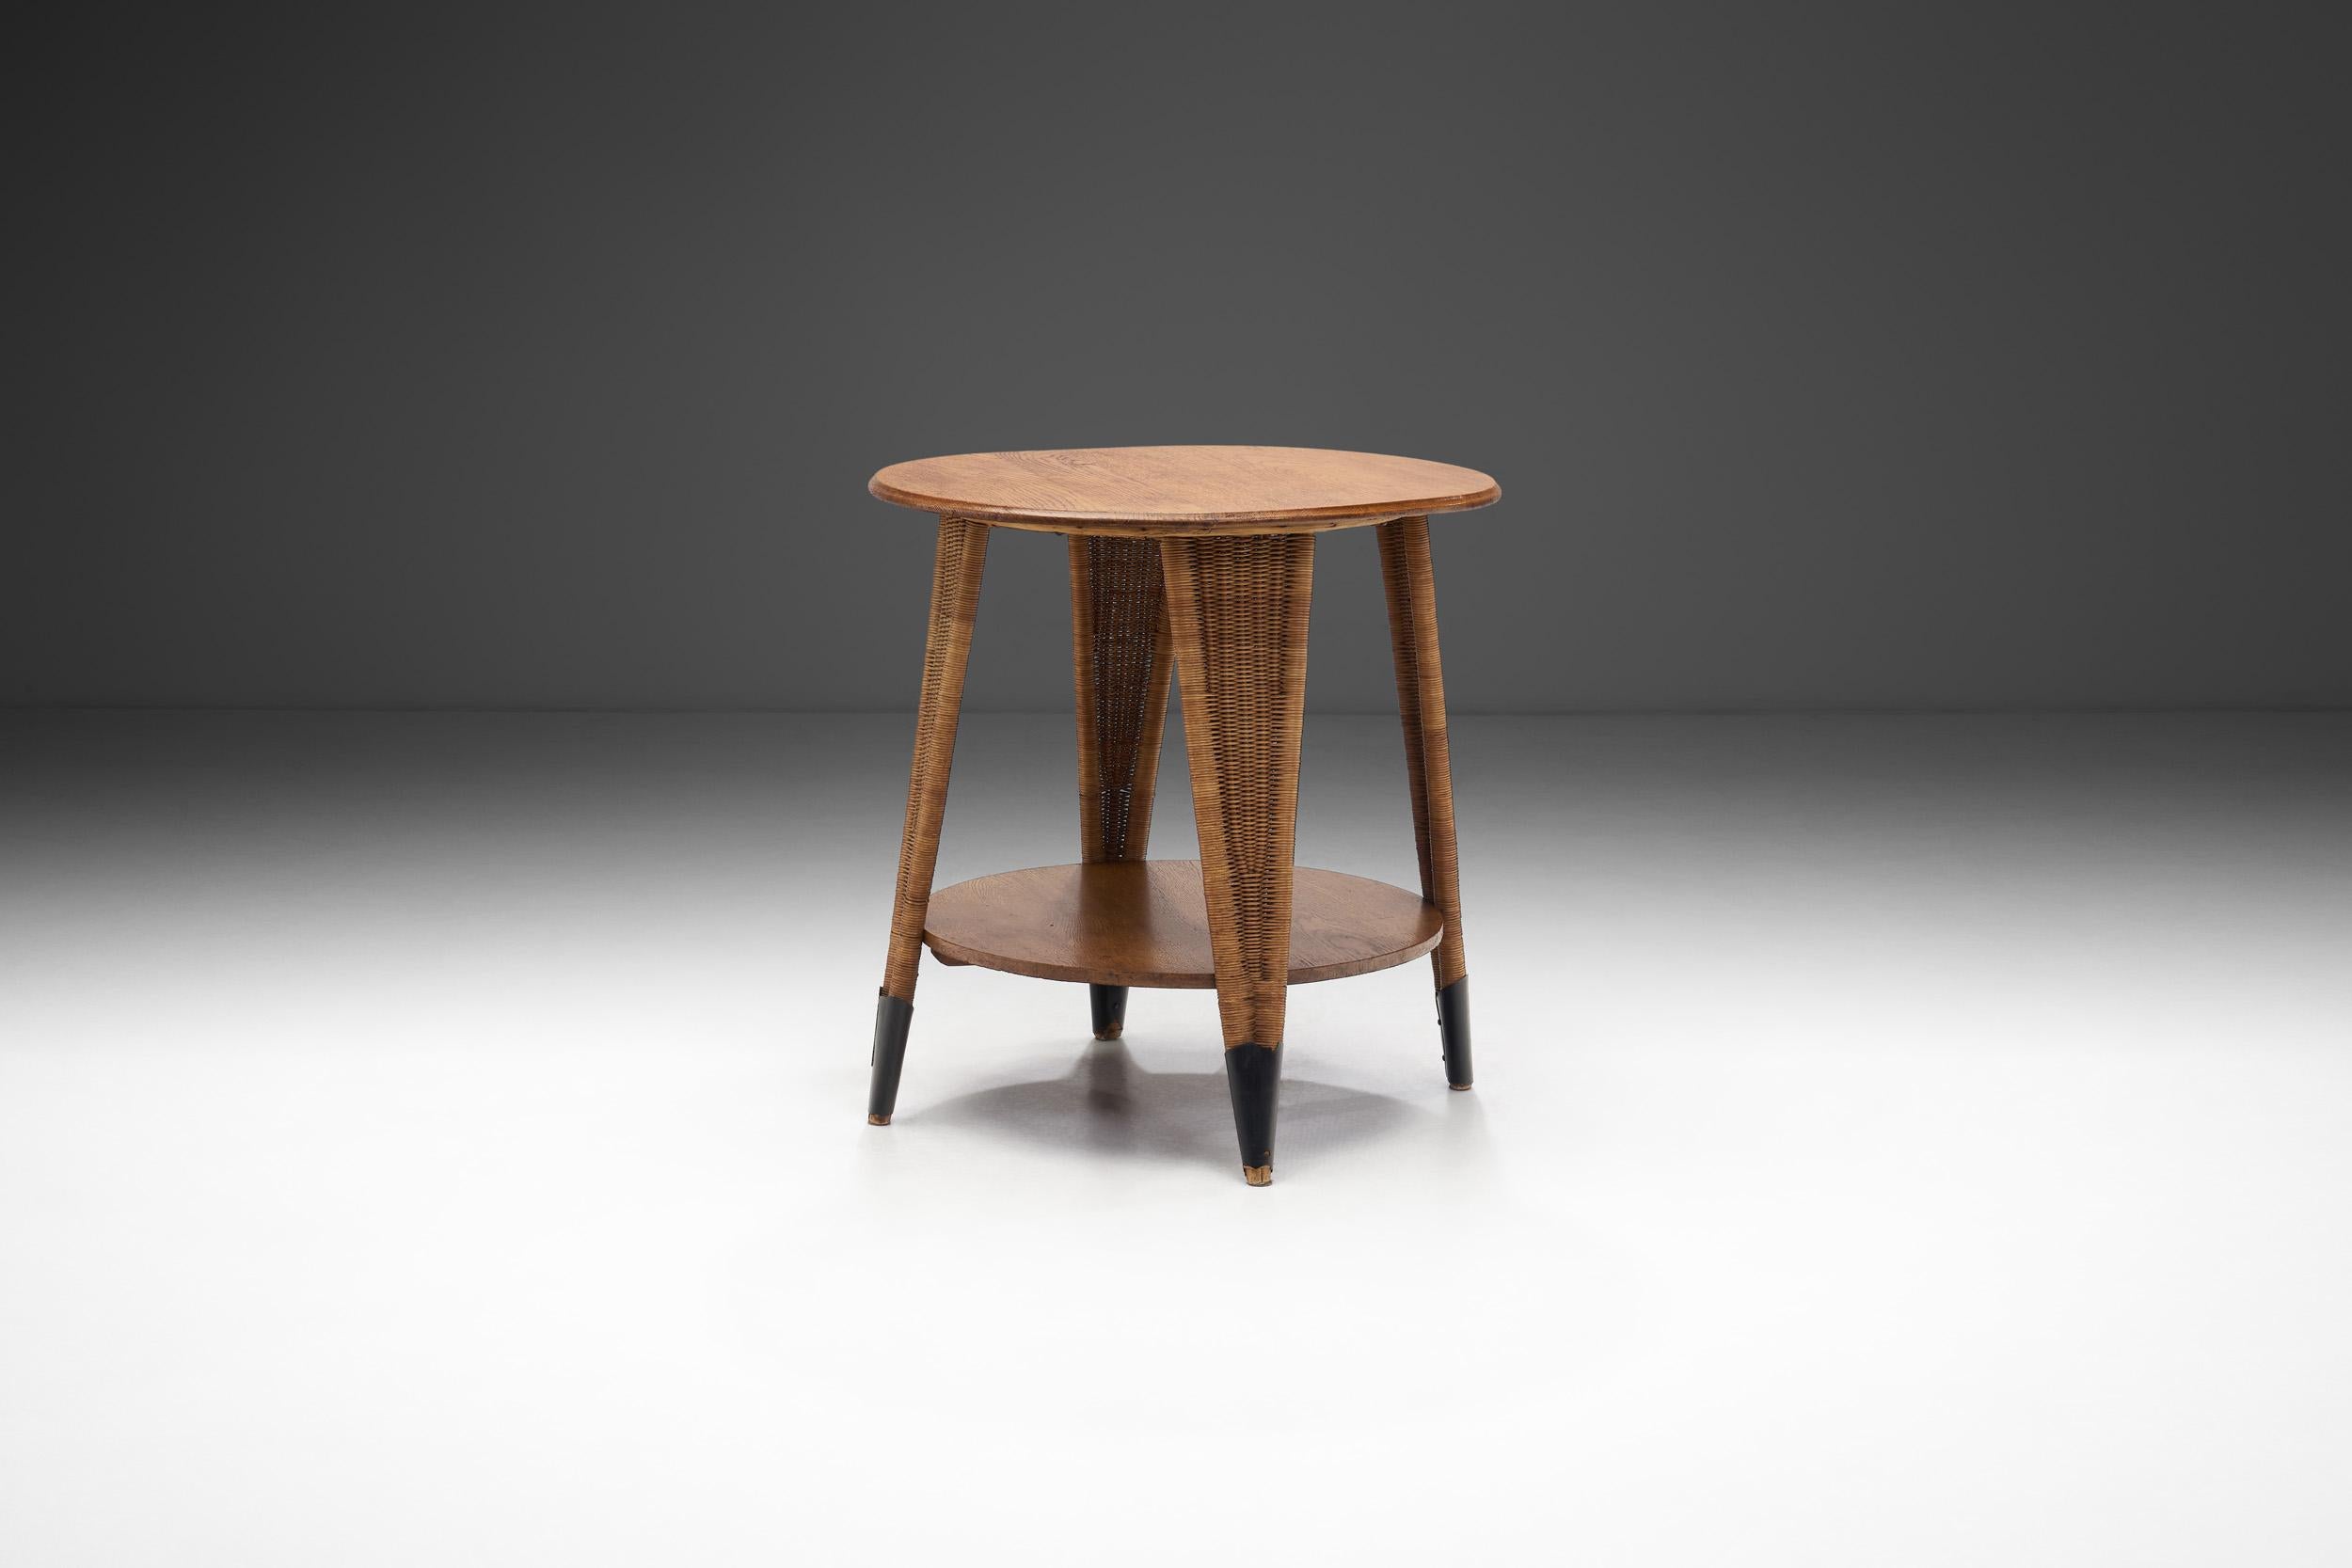 European Circular Oak Coffee Table With Wicker Legs, Europe 20th Century